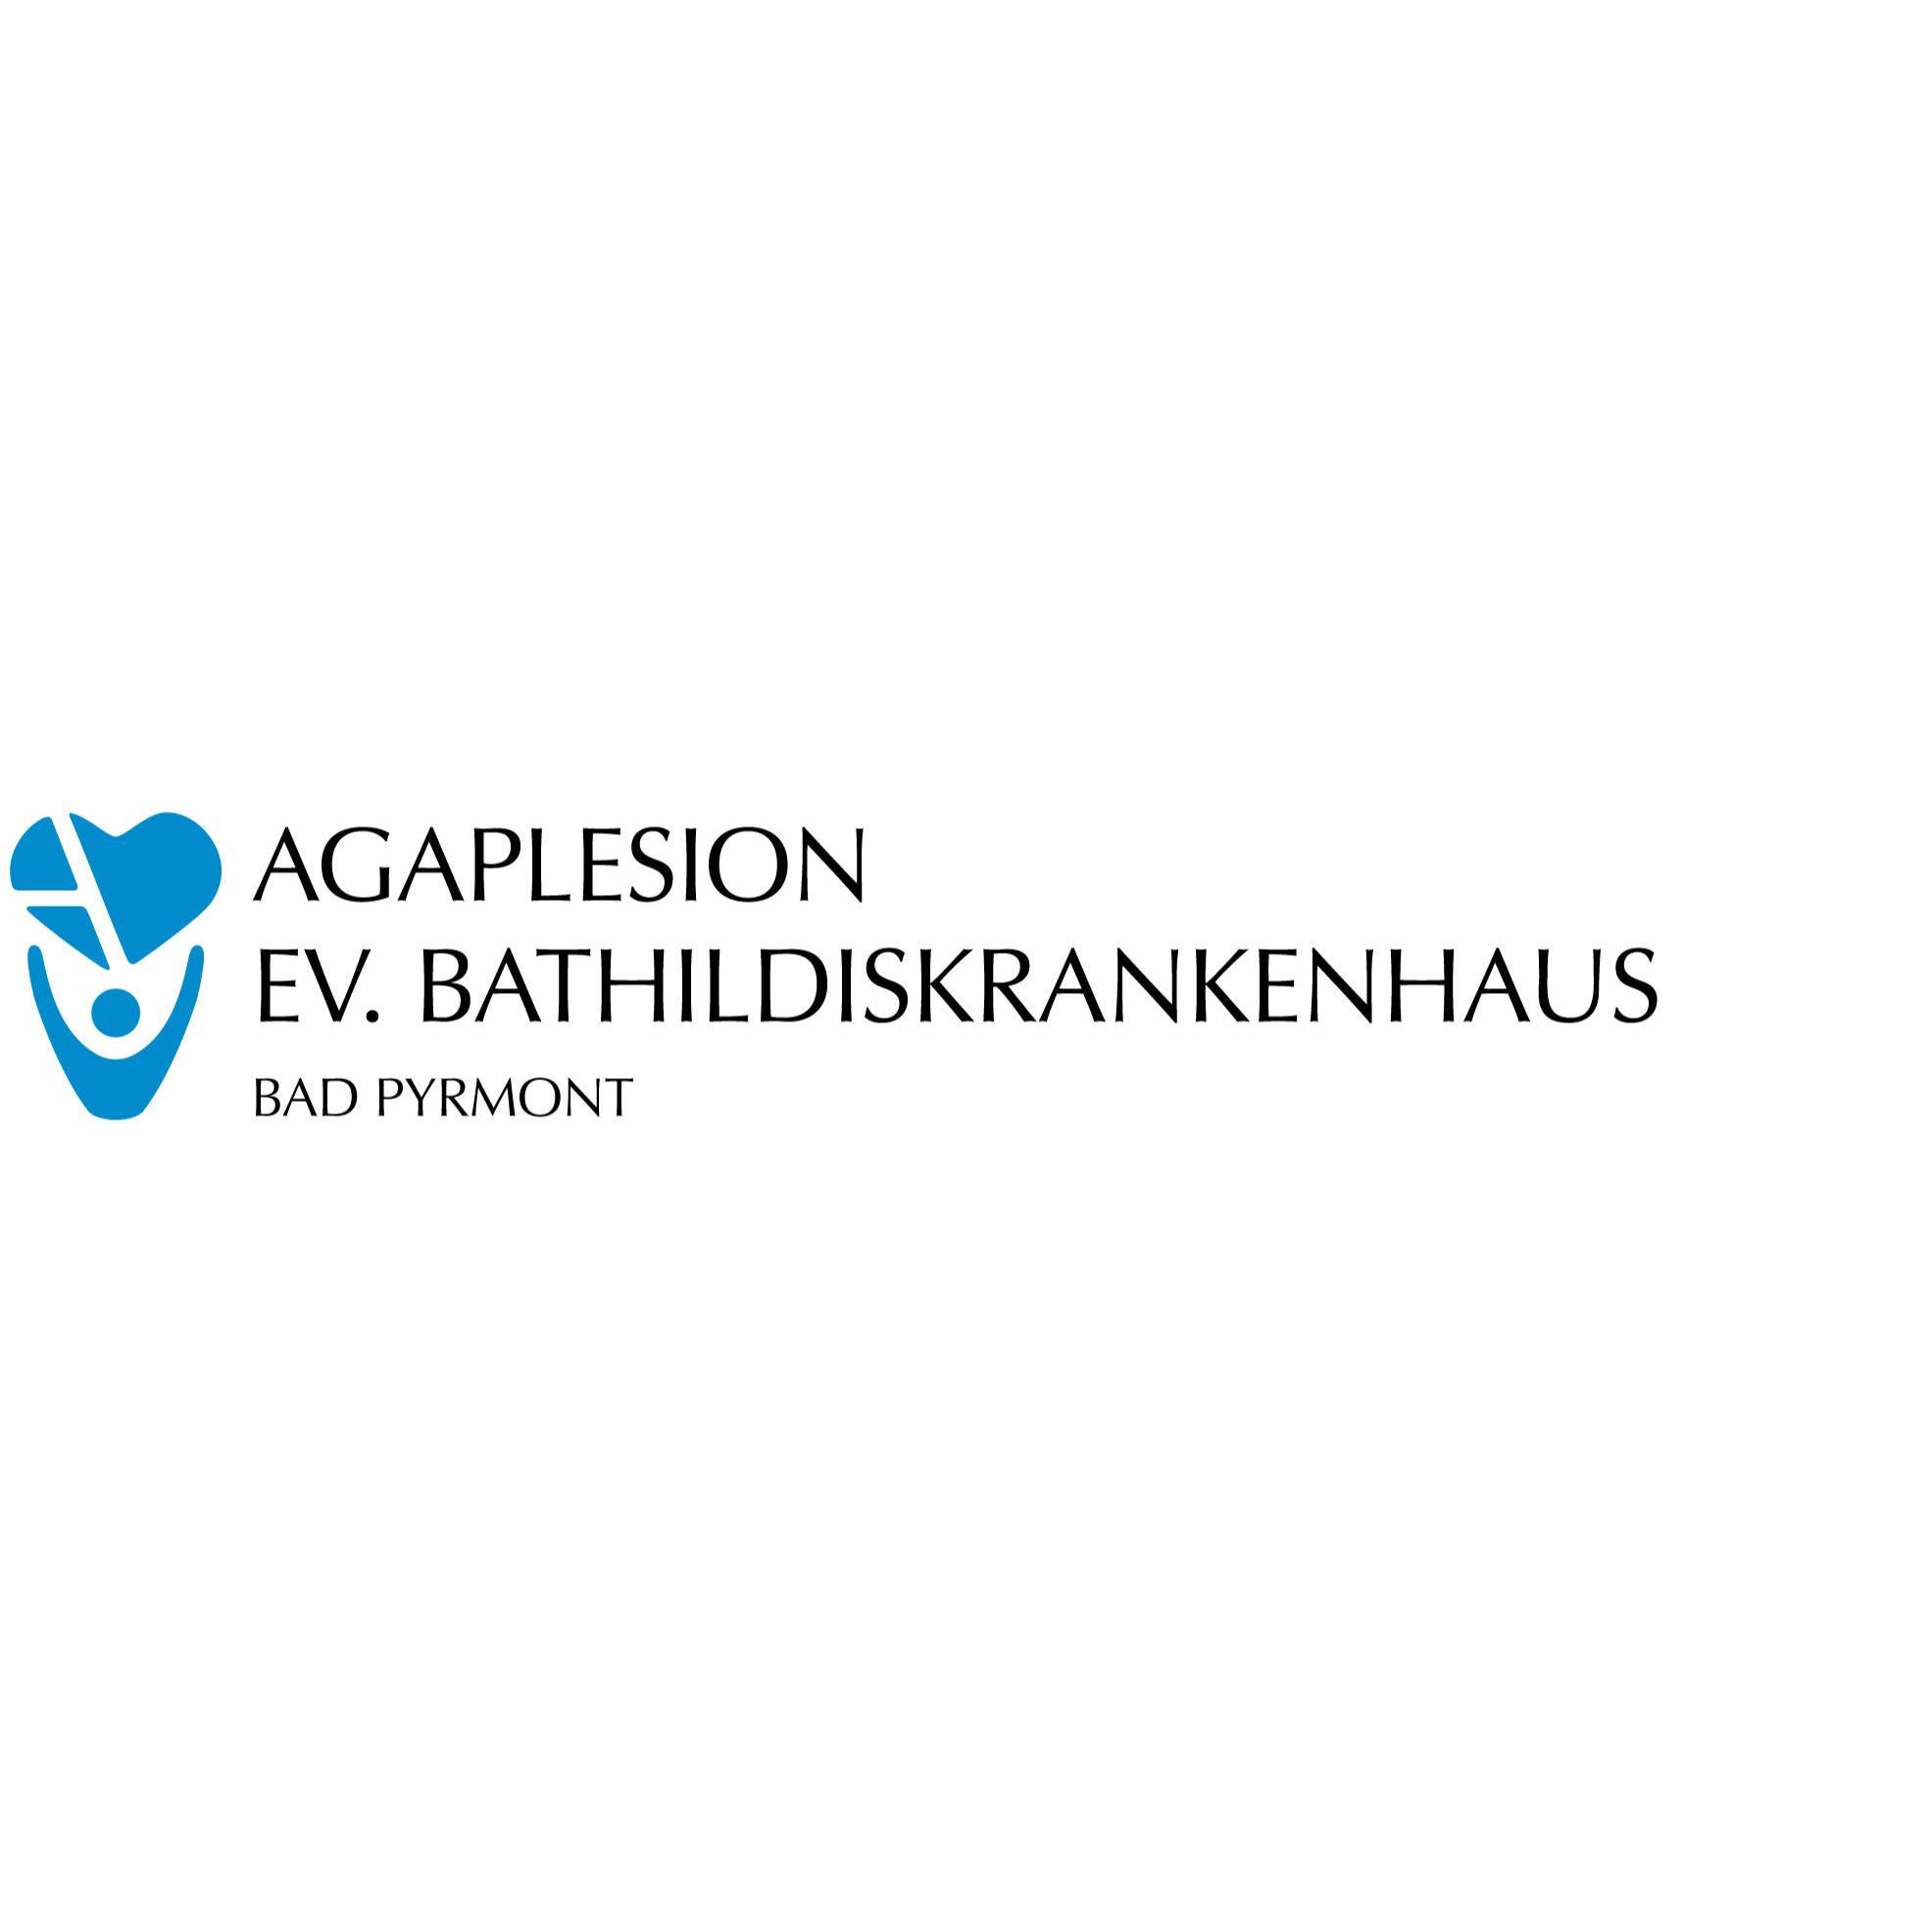 AGAPLESION EV. BATHILDISKRANKENHAUS BAD PYRMONT in Bad Pyrmont - Logo